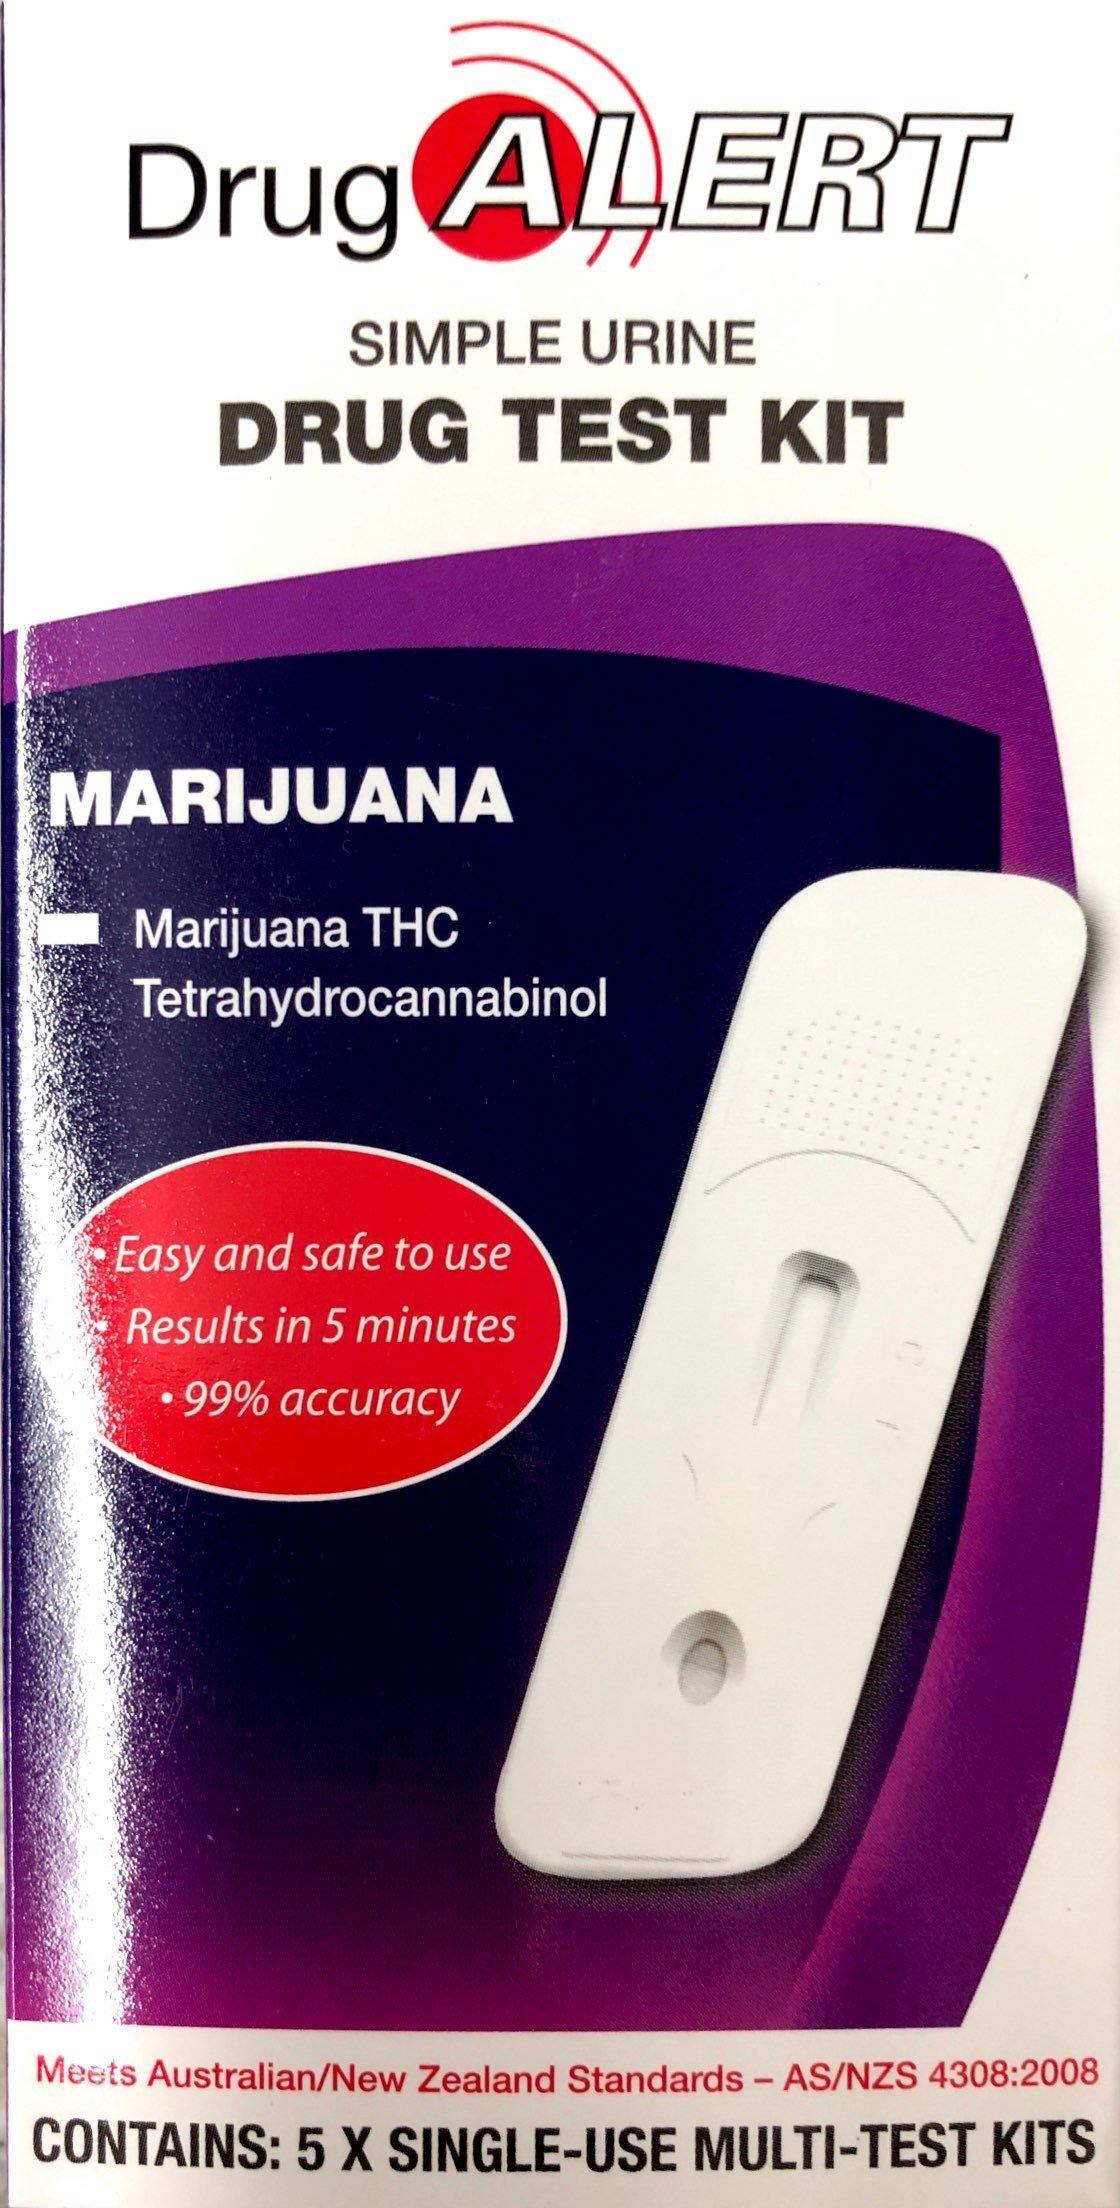 Drug Alert Urine 5 Test kit for Marijuana THC Tetrahydrocannabinol $